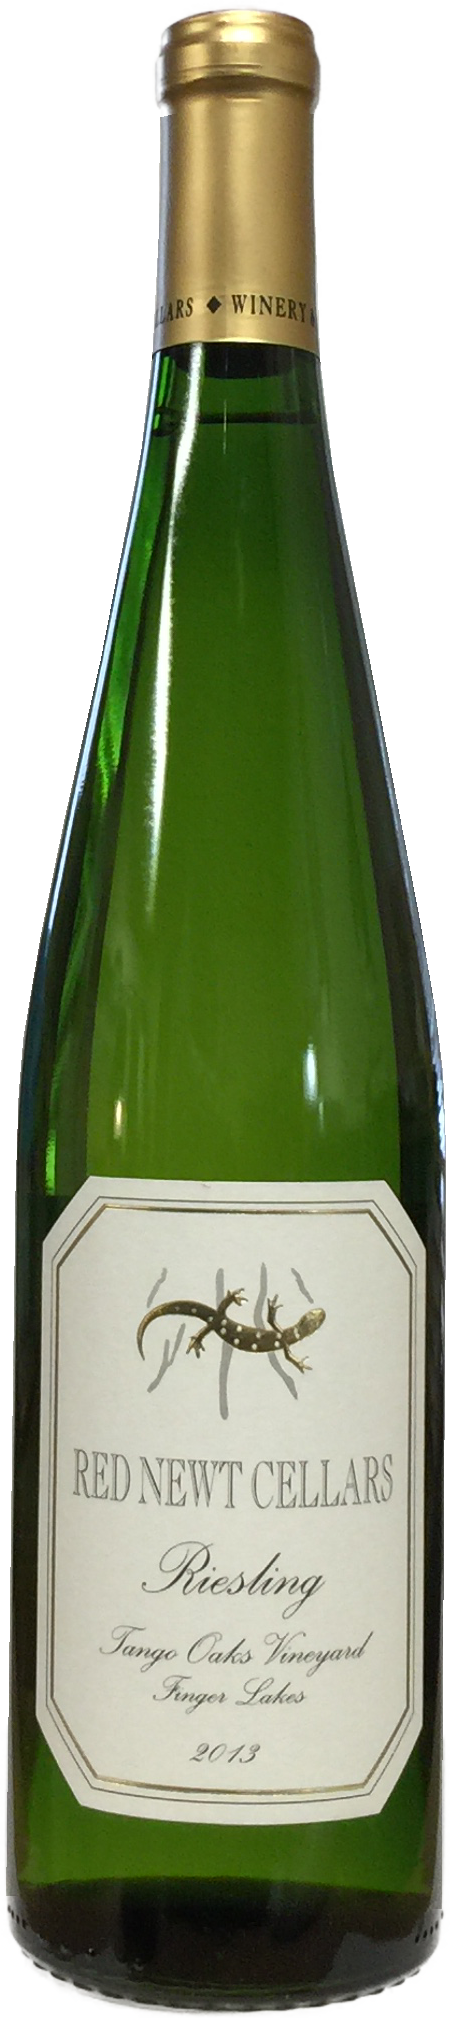 bottle of 2012 dry riesling tango oaks vineyard